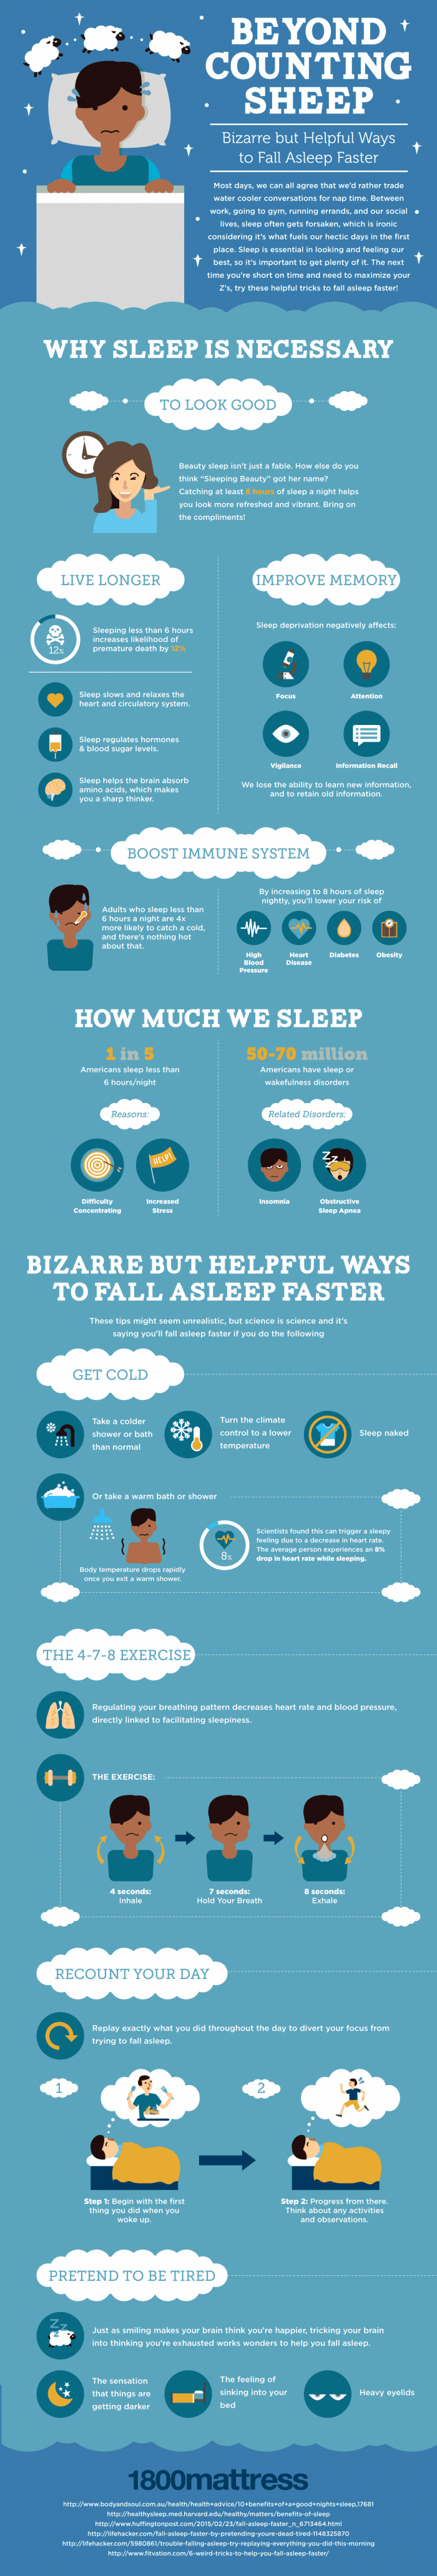 Bizarre Ways to Help You Fall Asleep Infographic